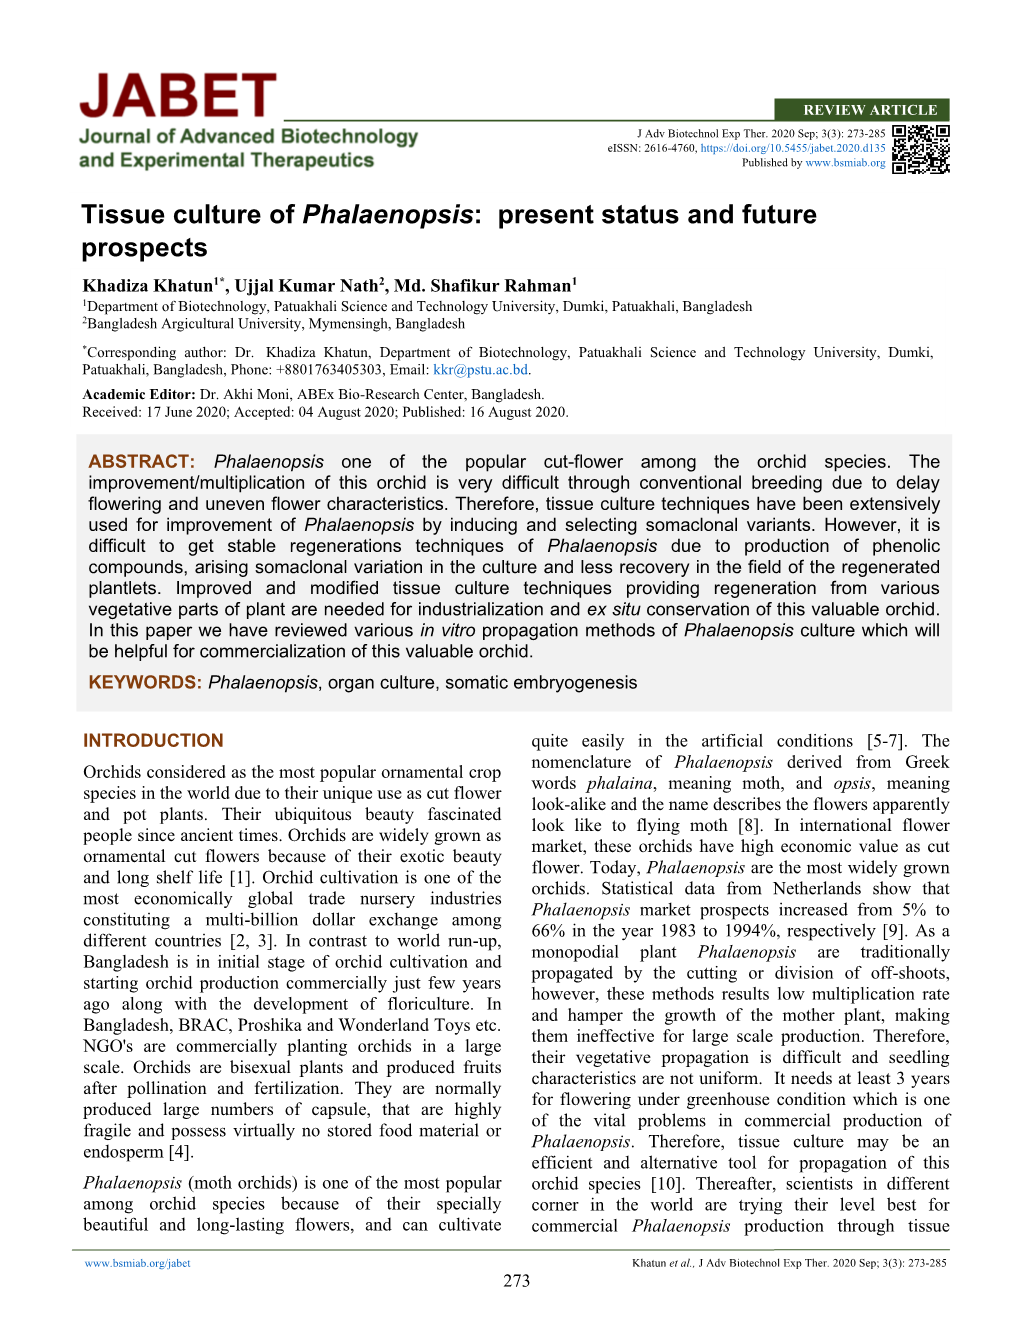 Tissue Culture of Phalaenopsis: Present Status and Future Prospects Khadiza Khatun1*, Ujjal Kumar Nath2, Md